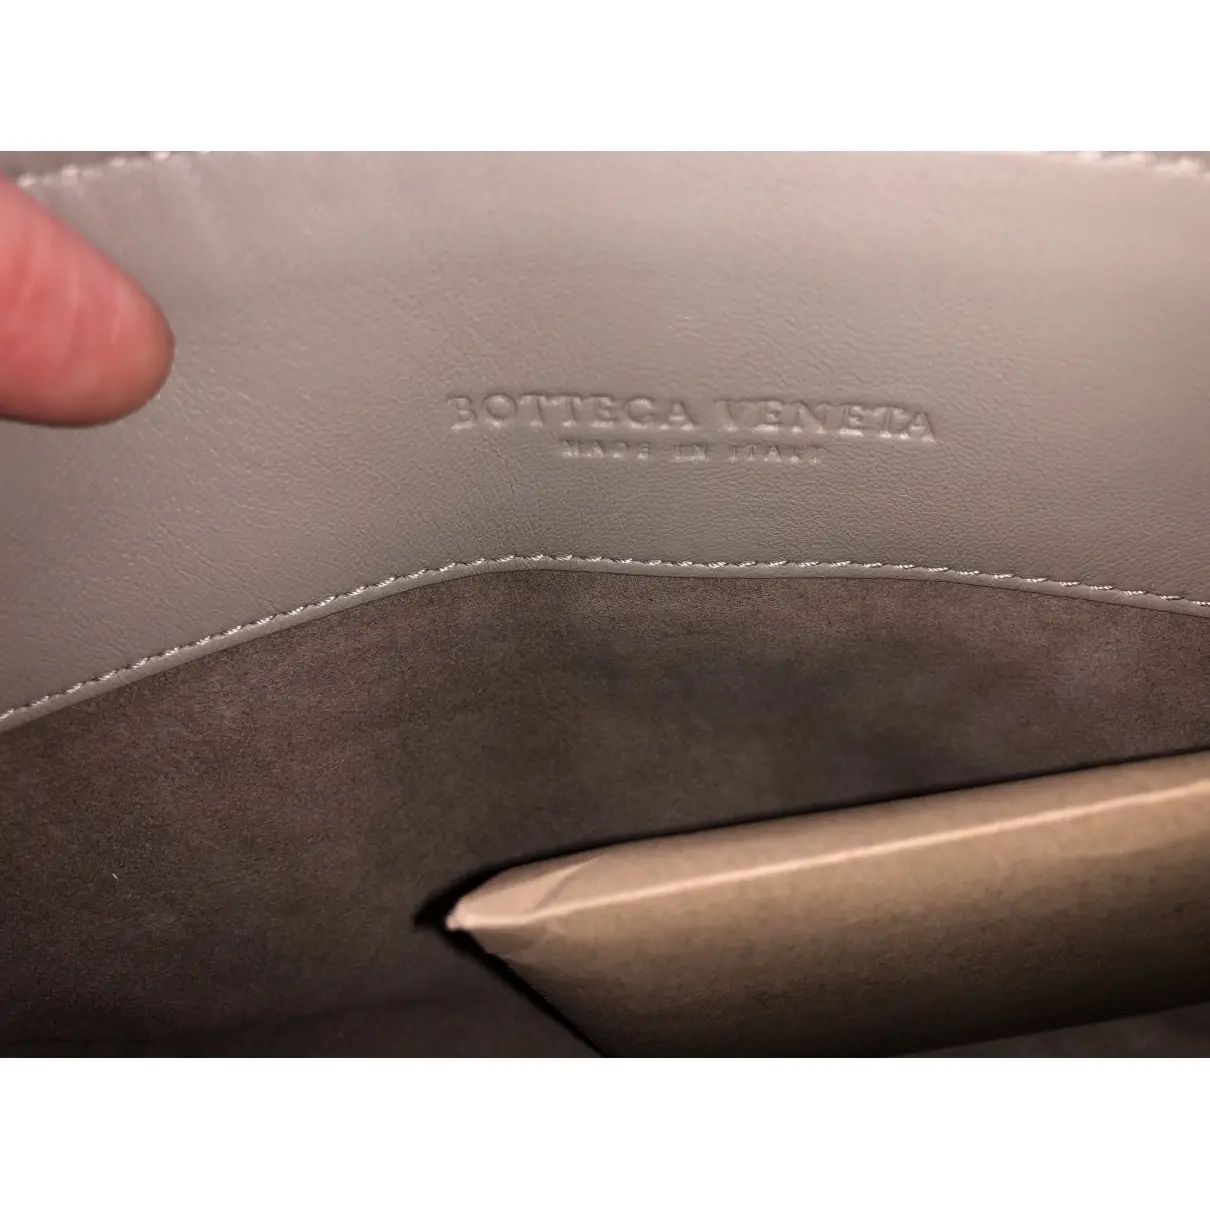 Bottega Veneta Olimpia leather handbag for sale